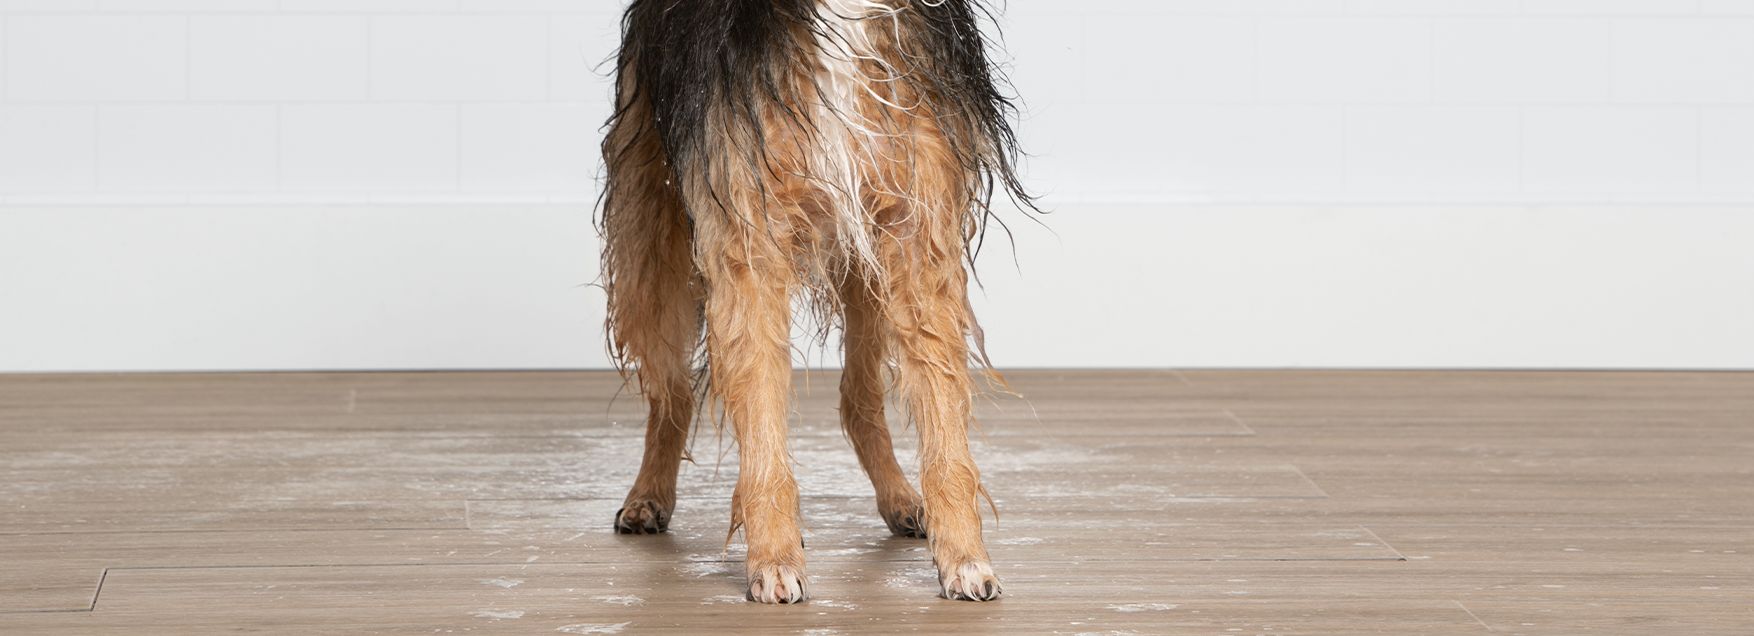 Matted Dog Hair: Expert Grooming Tips | PetSmart